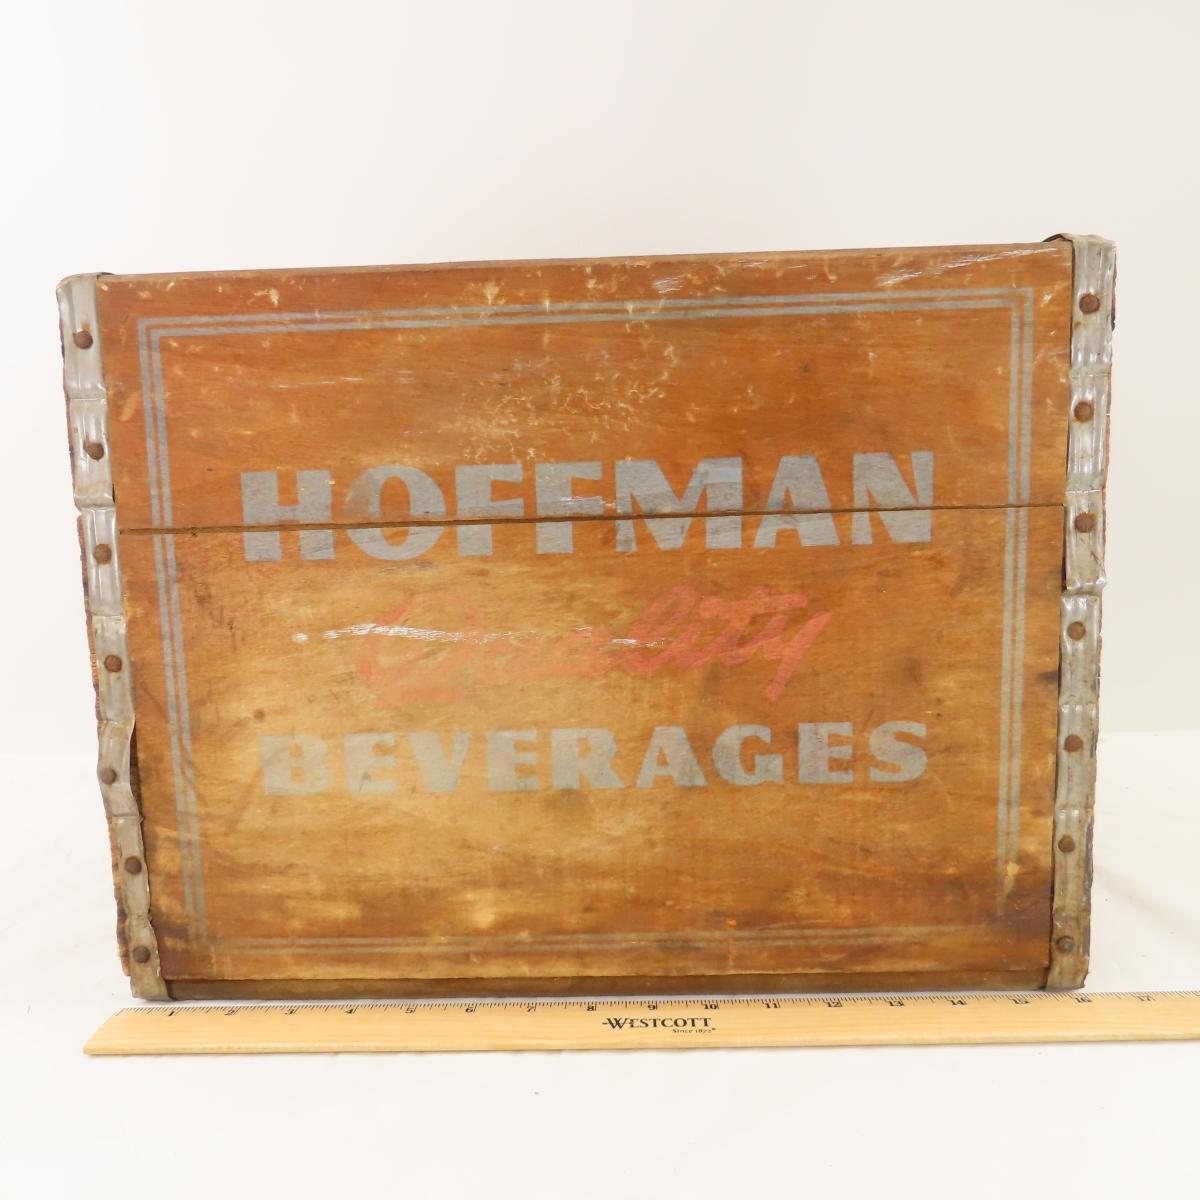 Hoffman Beverages Wooden Crate & Canning Jars